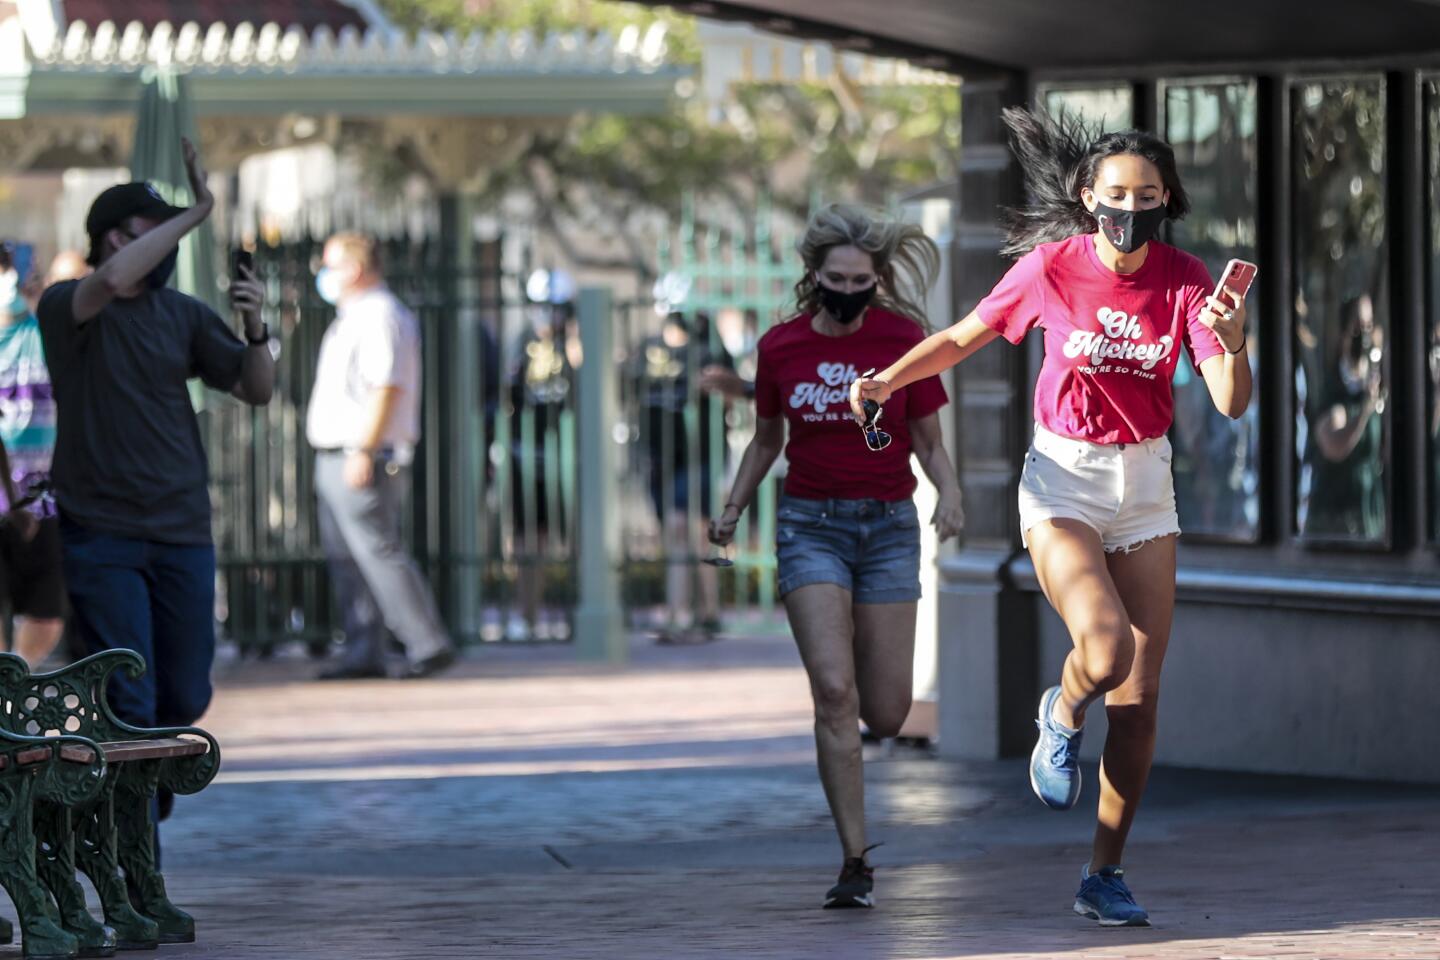 Two masked girls break into a run